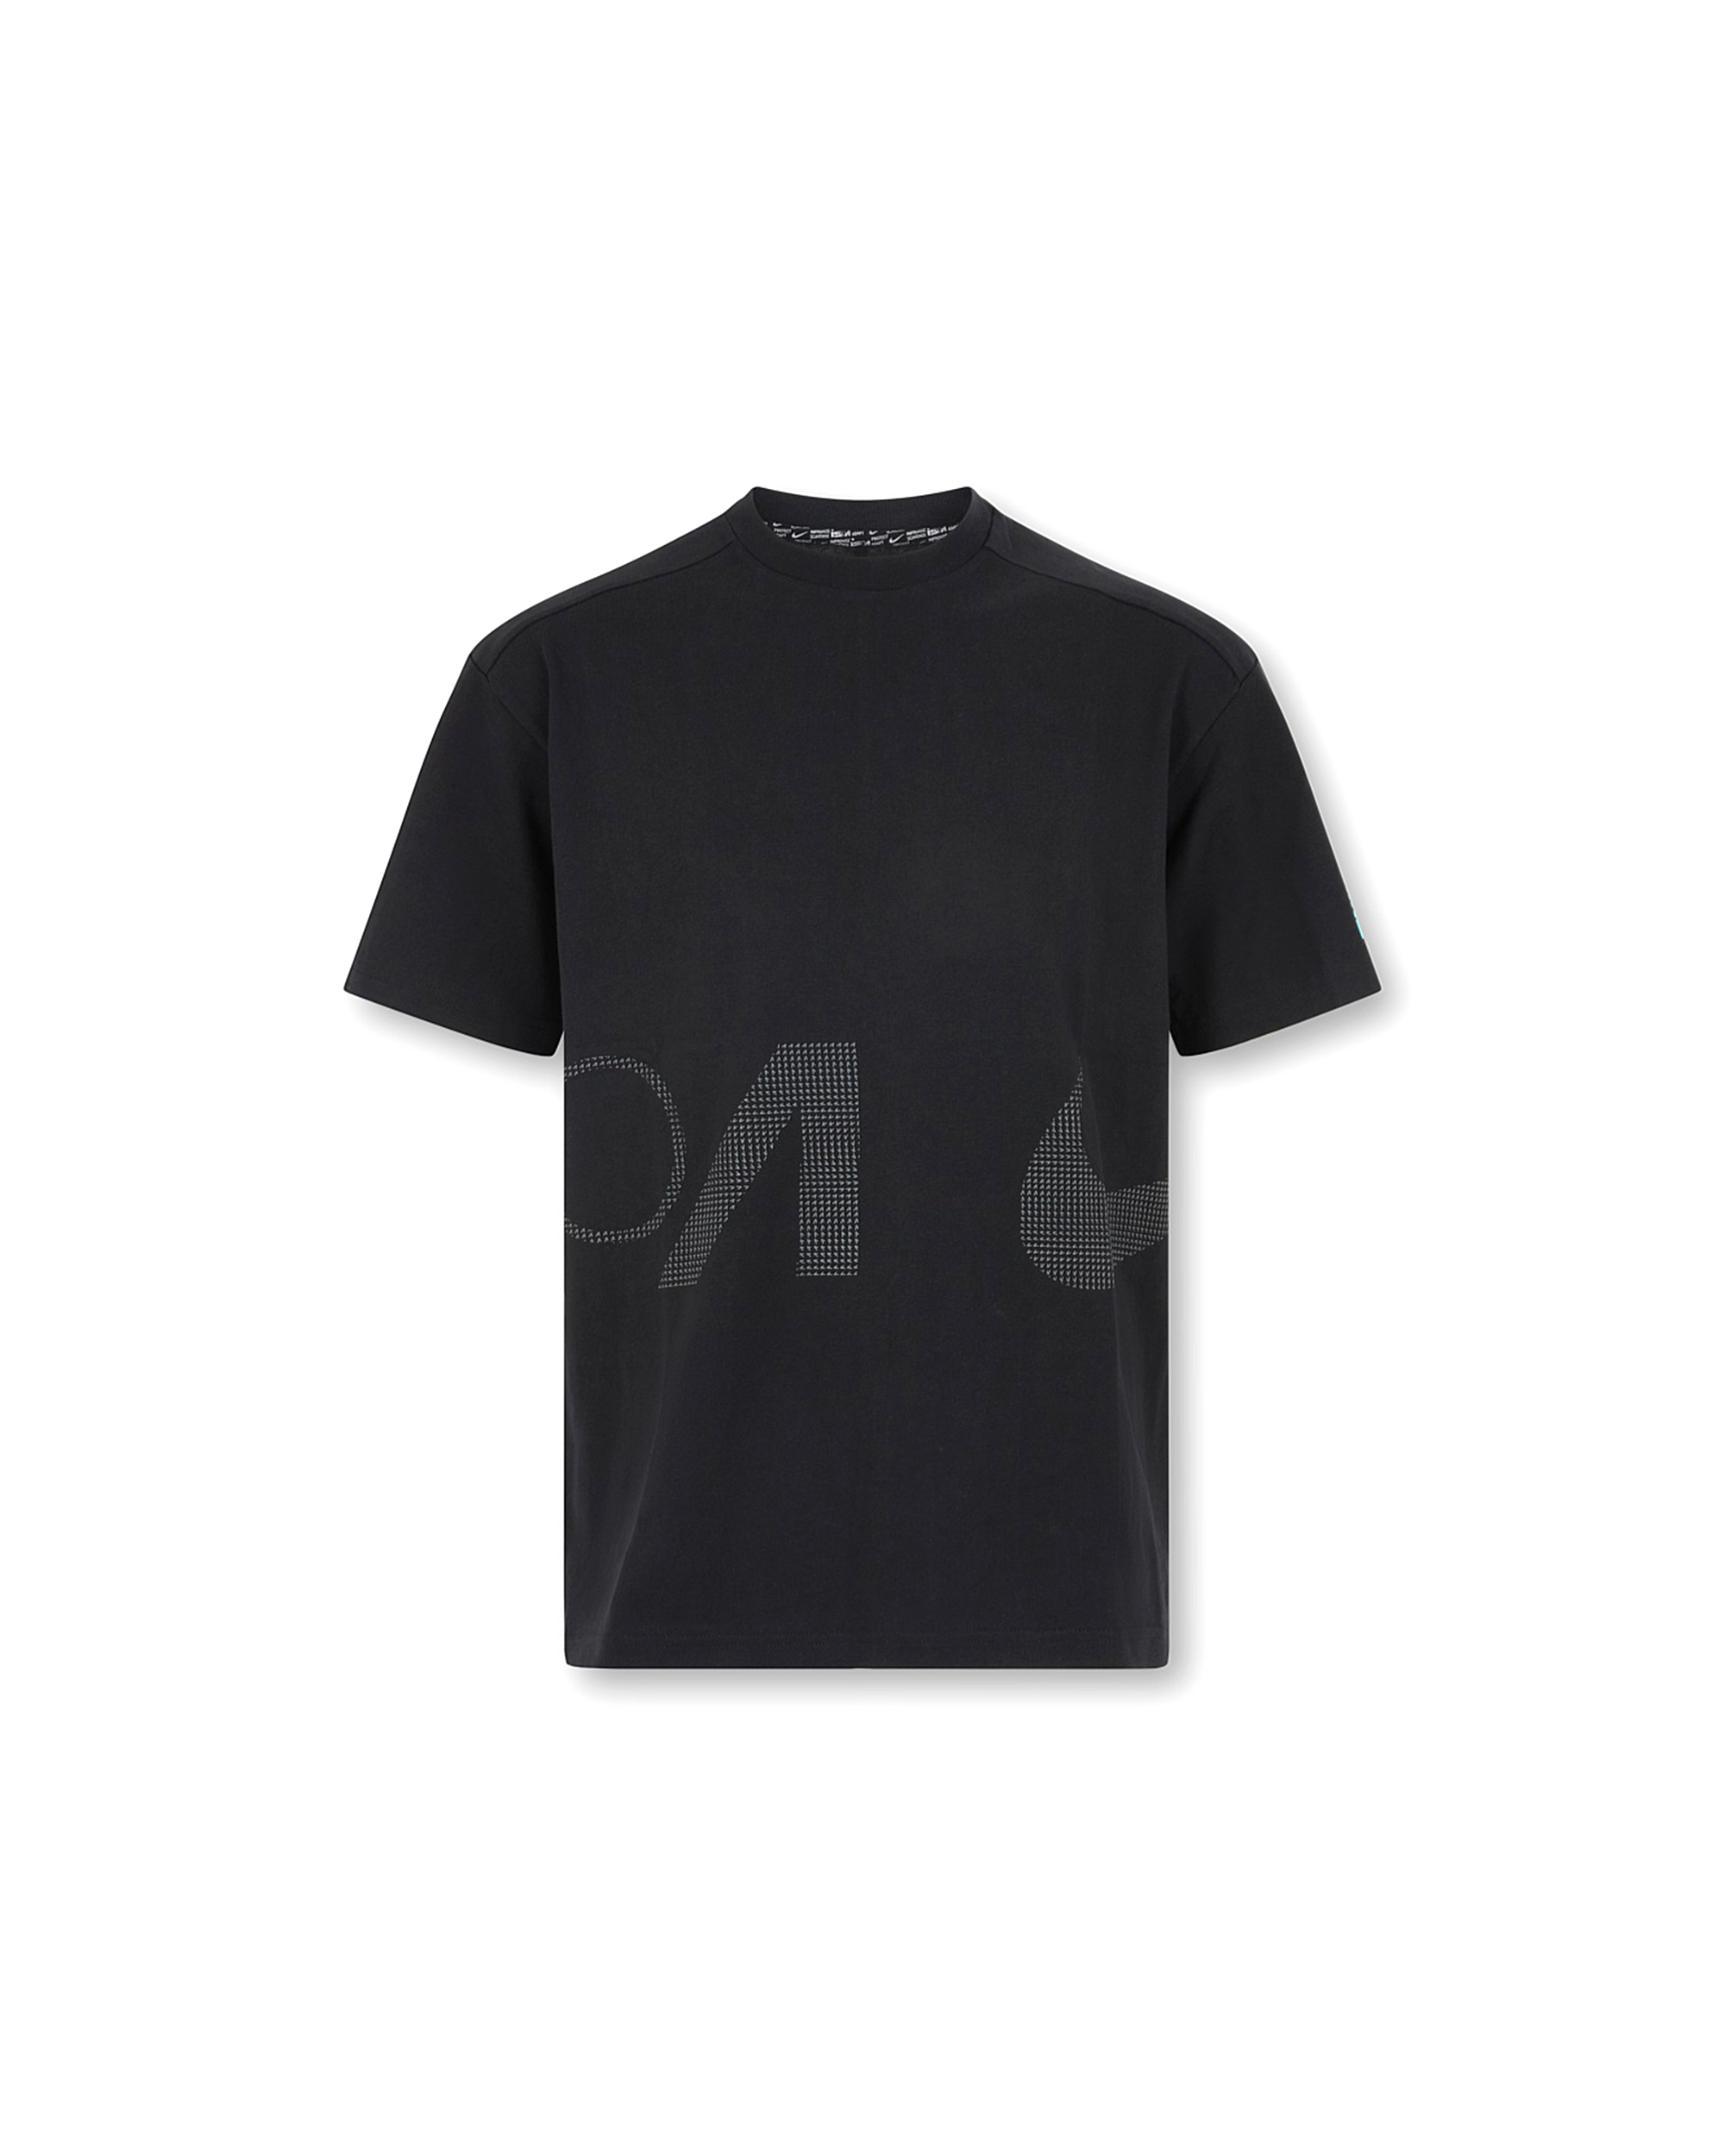 ISPA T-shirt - Black / Baltic Blue / Iron Grey